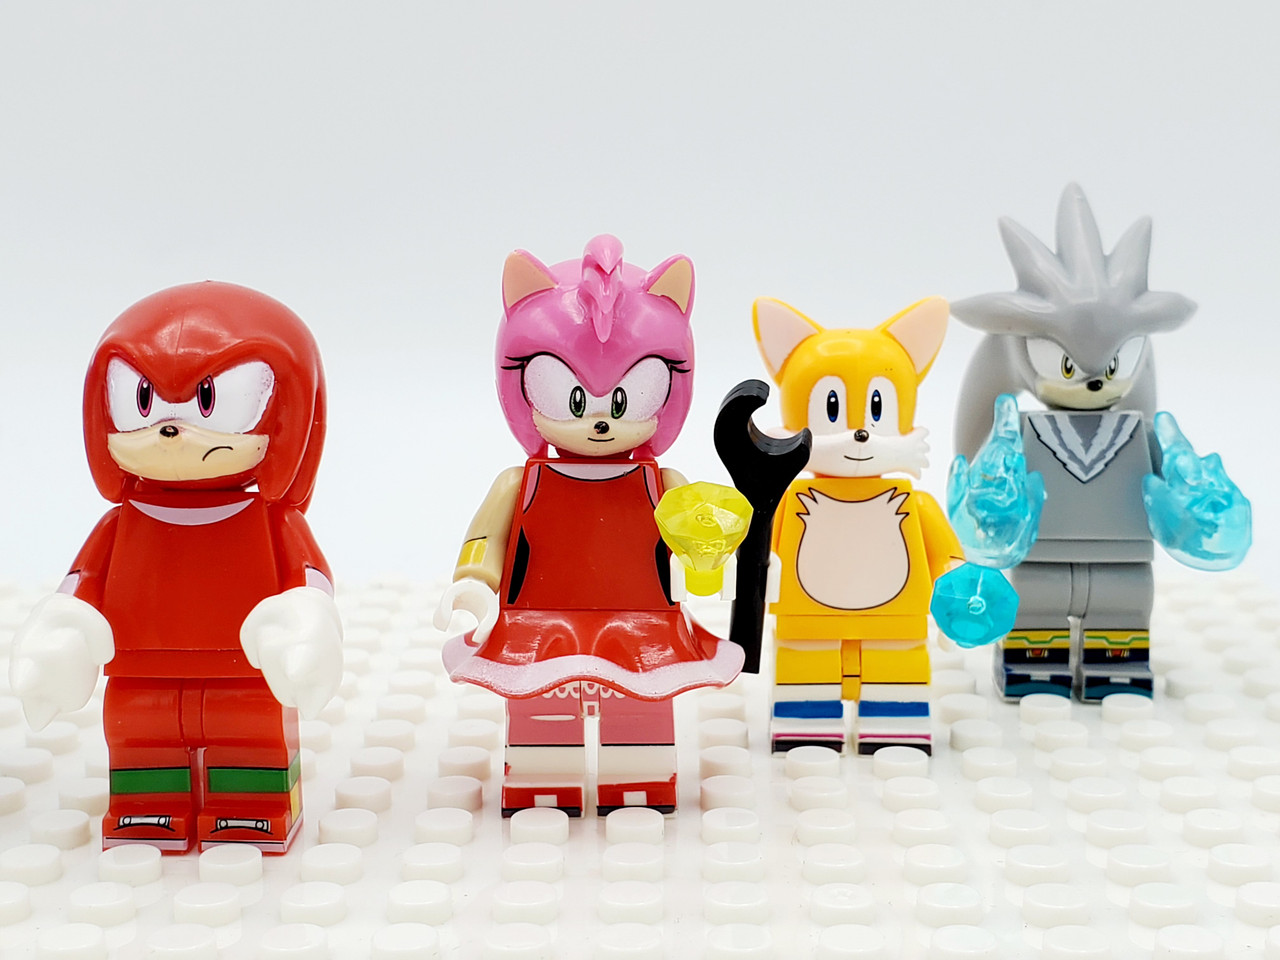 Lego MINIFIGURE Sonic the Hedgehog 